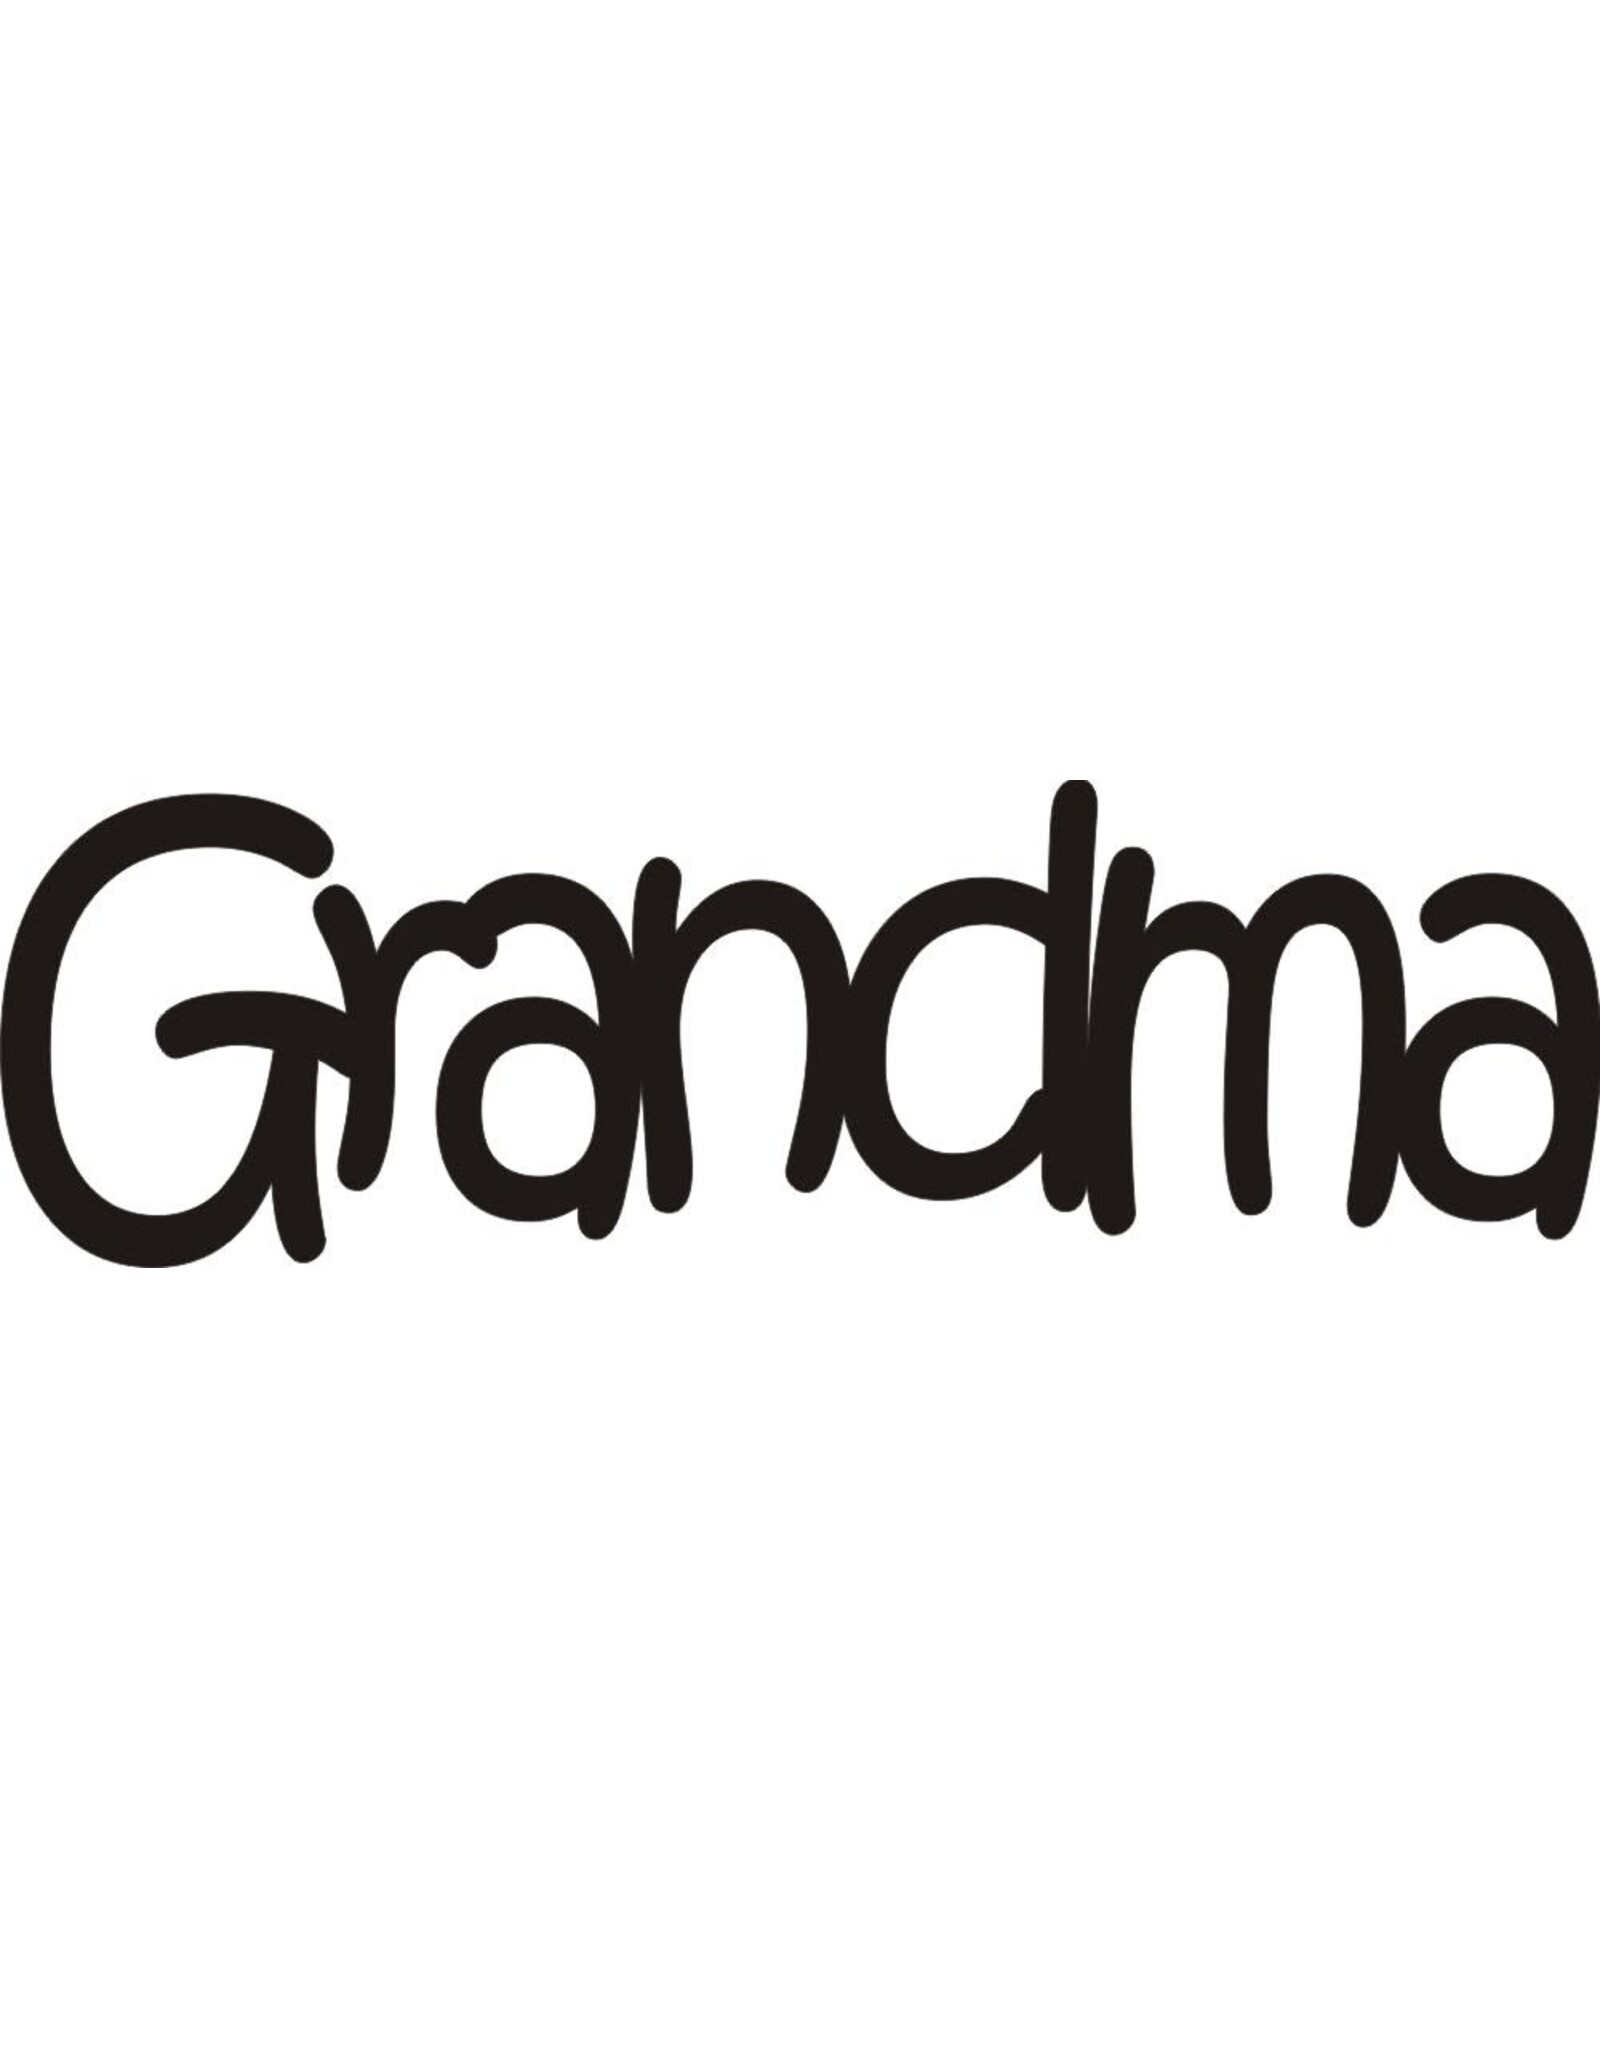 Grandma banner